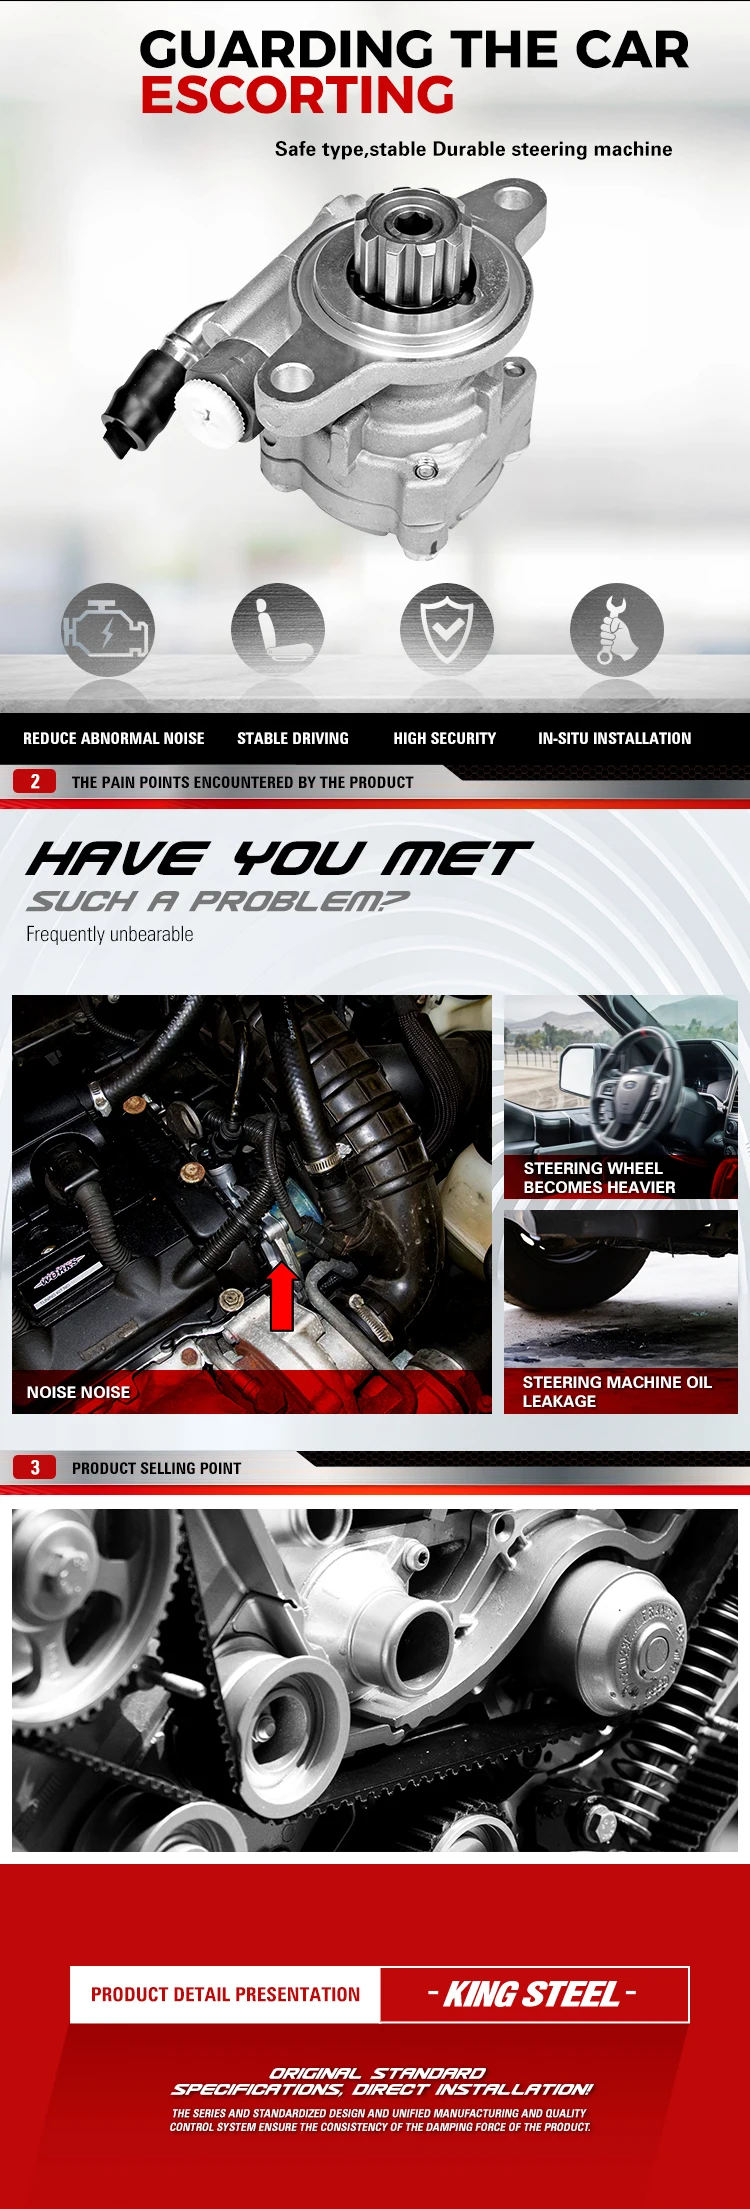 Kingsteerl Car Part Hydraulic Power Steering Gear Pump 44320-06080 